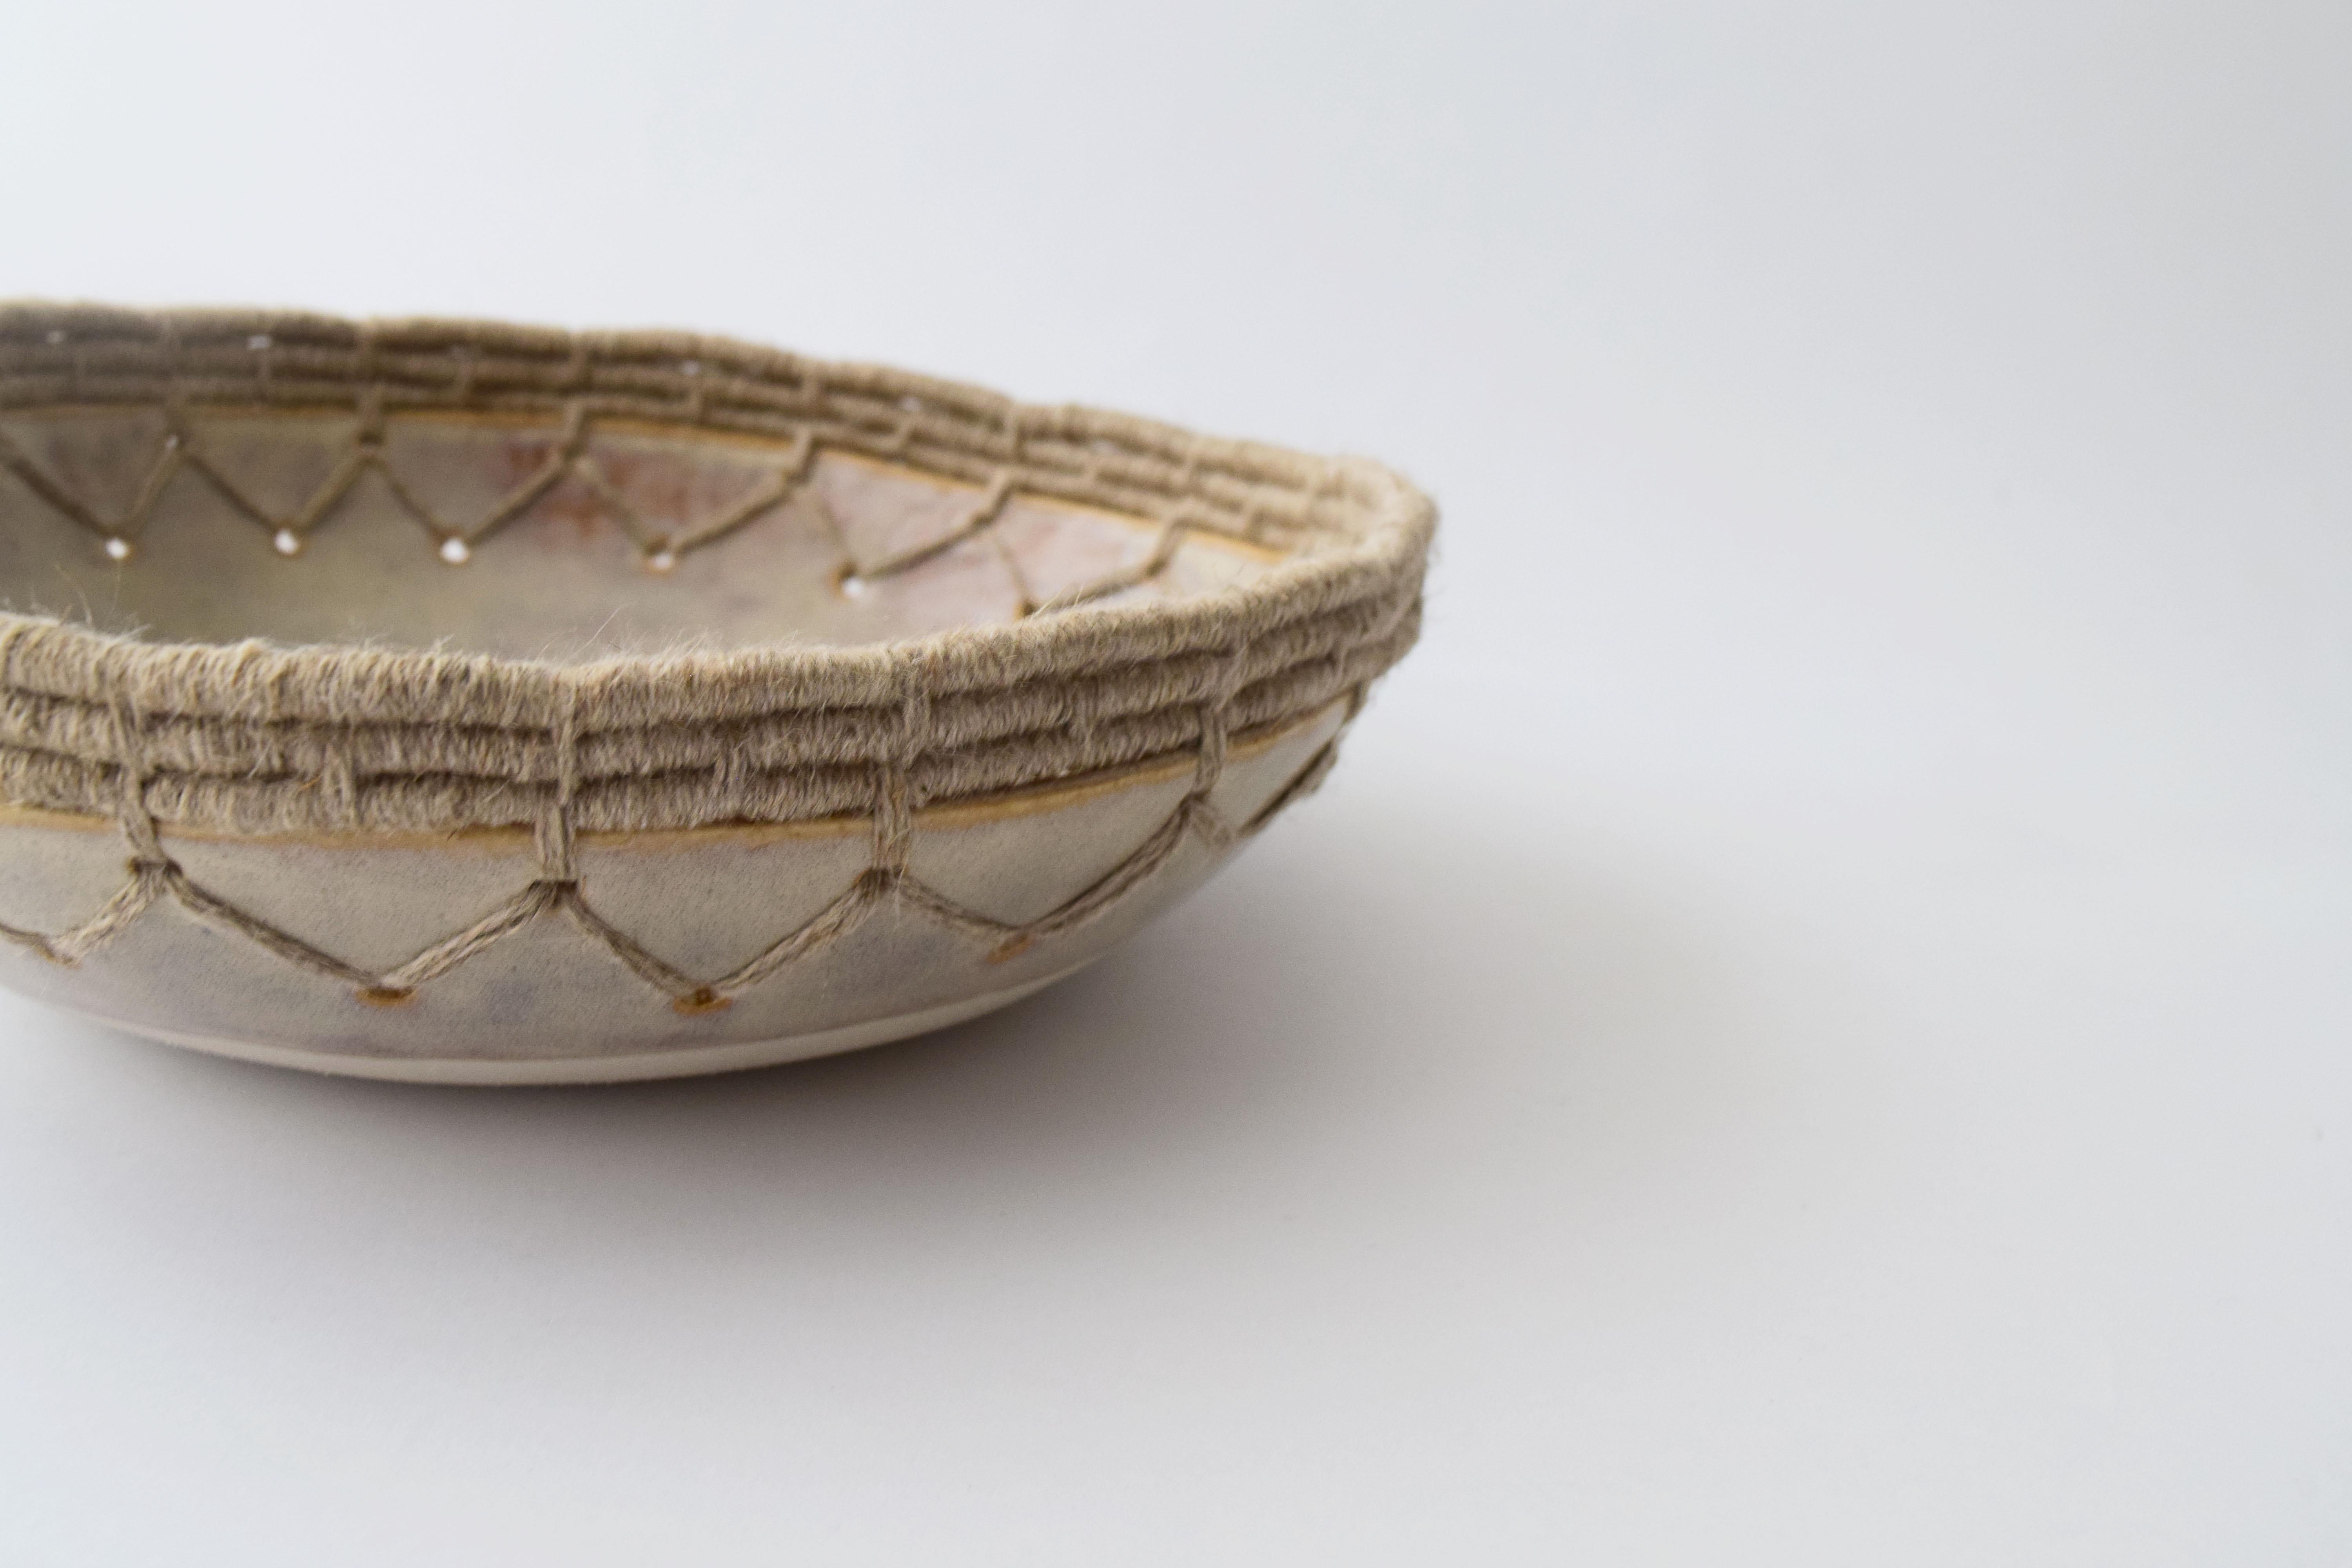 American Handmade Ceramic Bowl with Gray Glaze, Woven Edge Detail